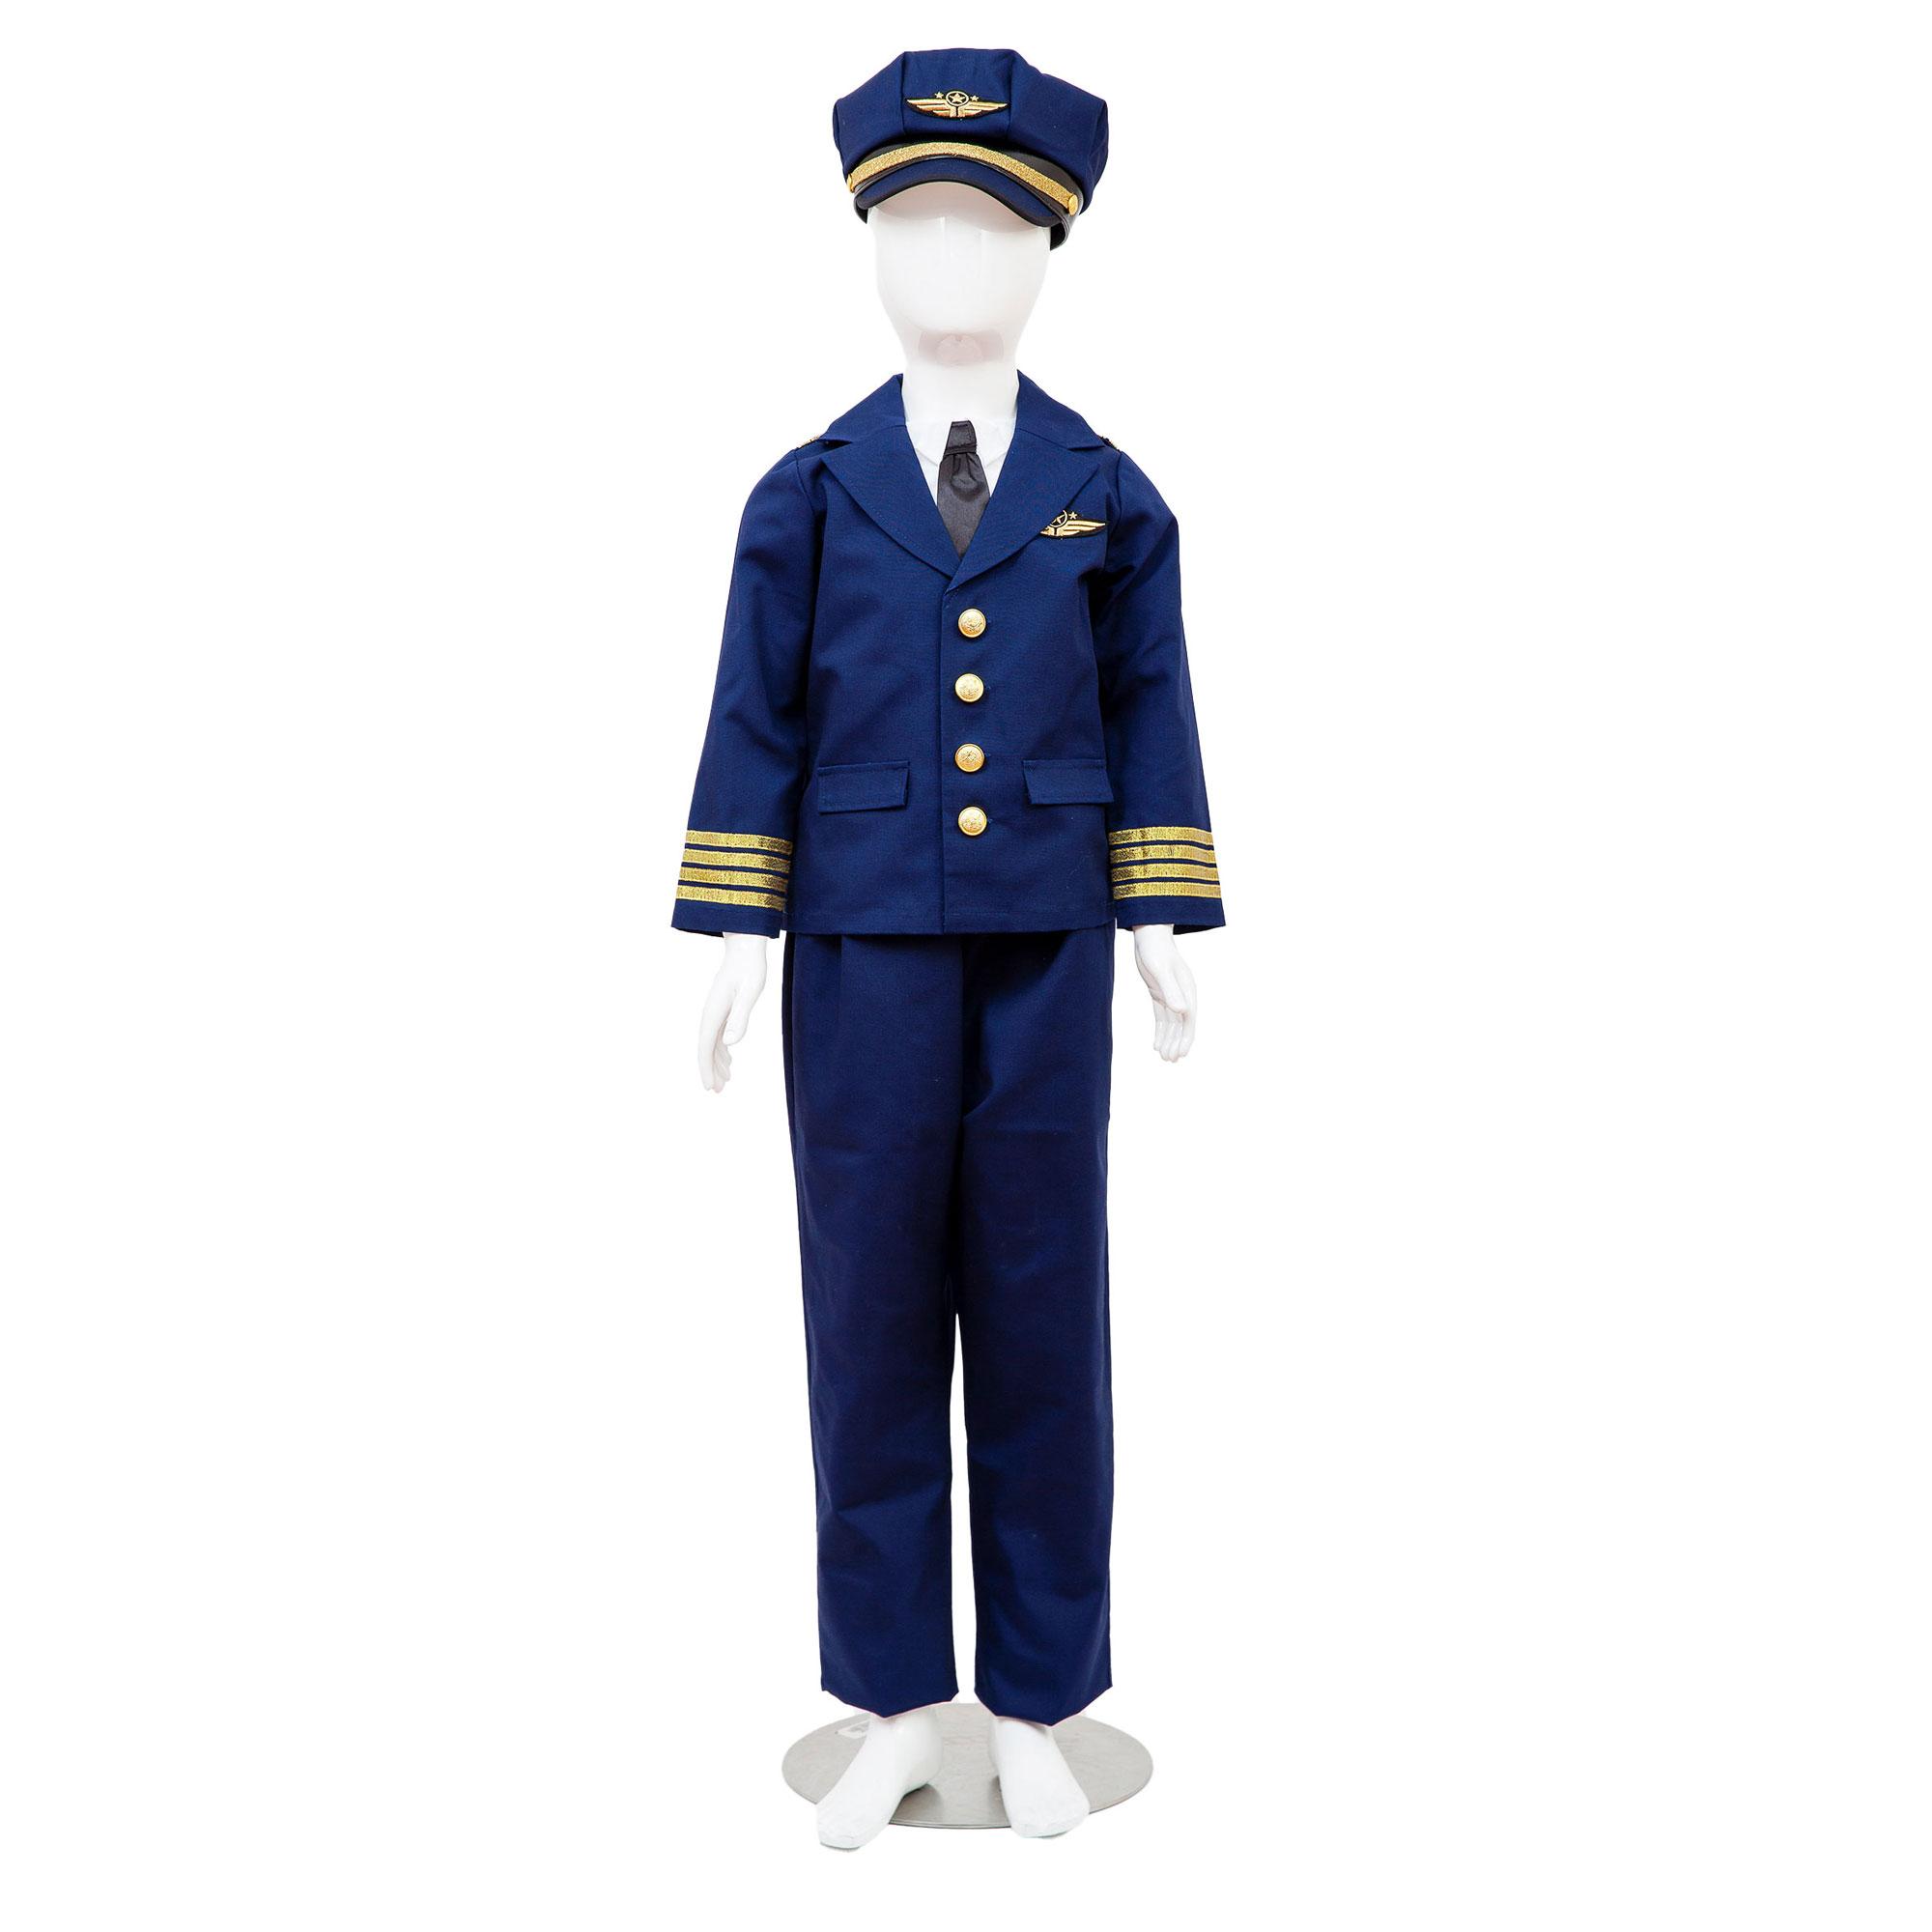 Child Pilot Costume Costumes & Apparel - Party Centre - Party Centre